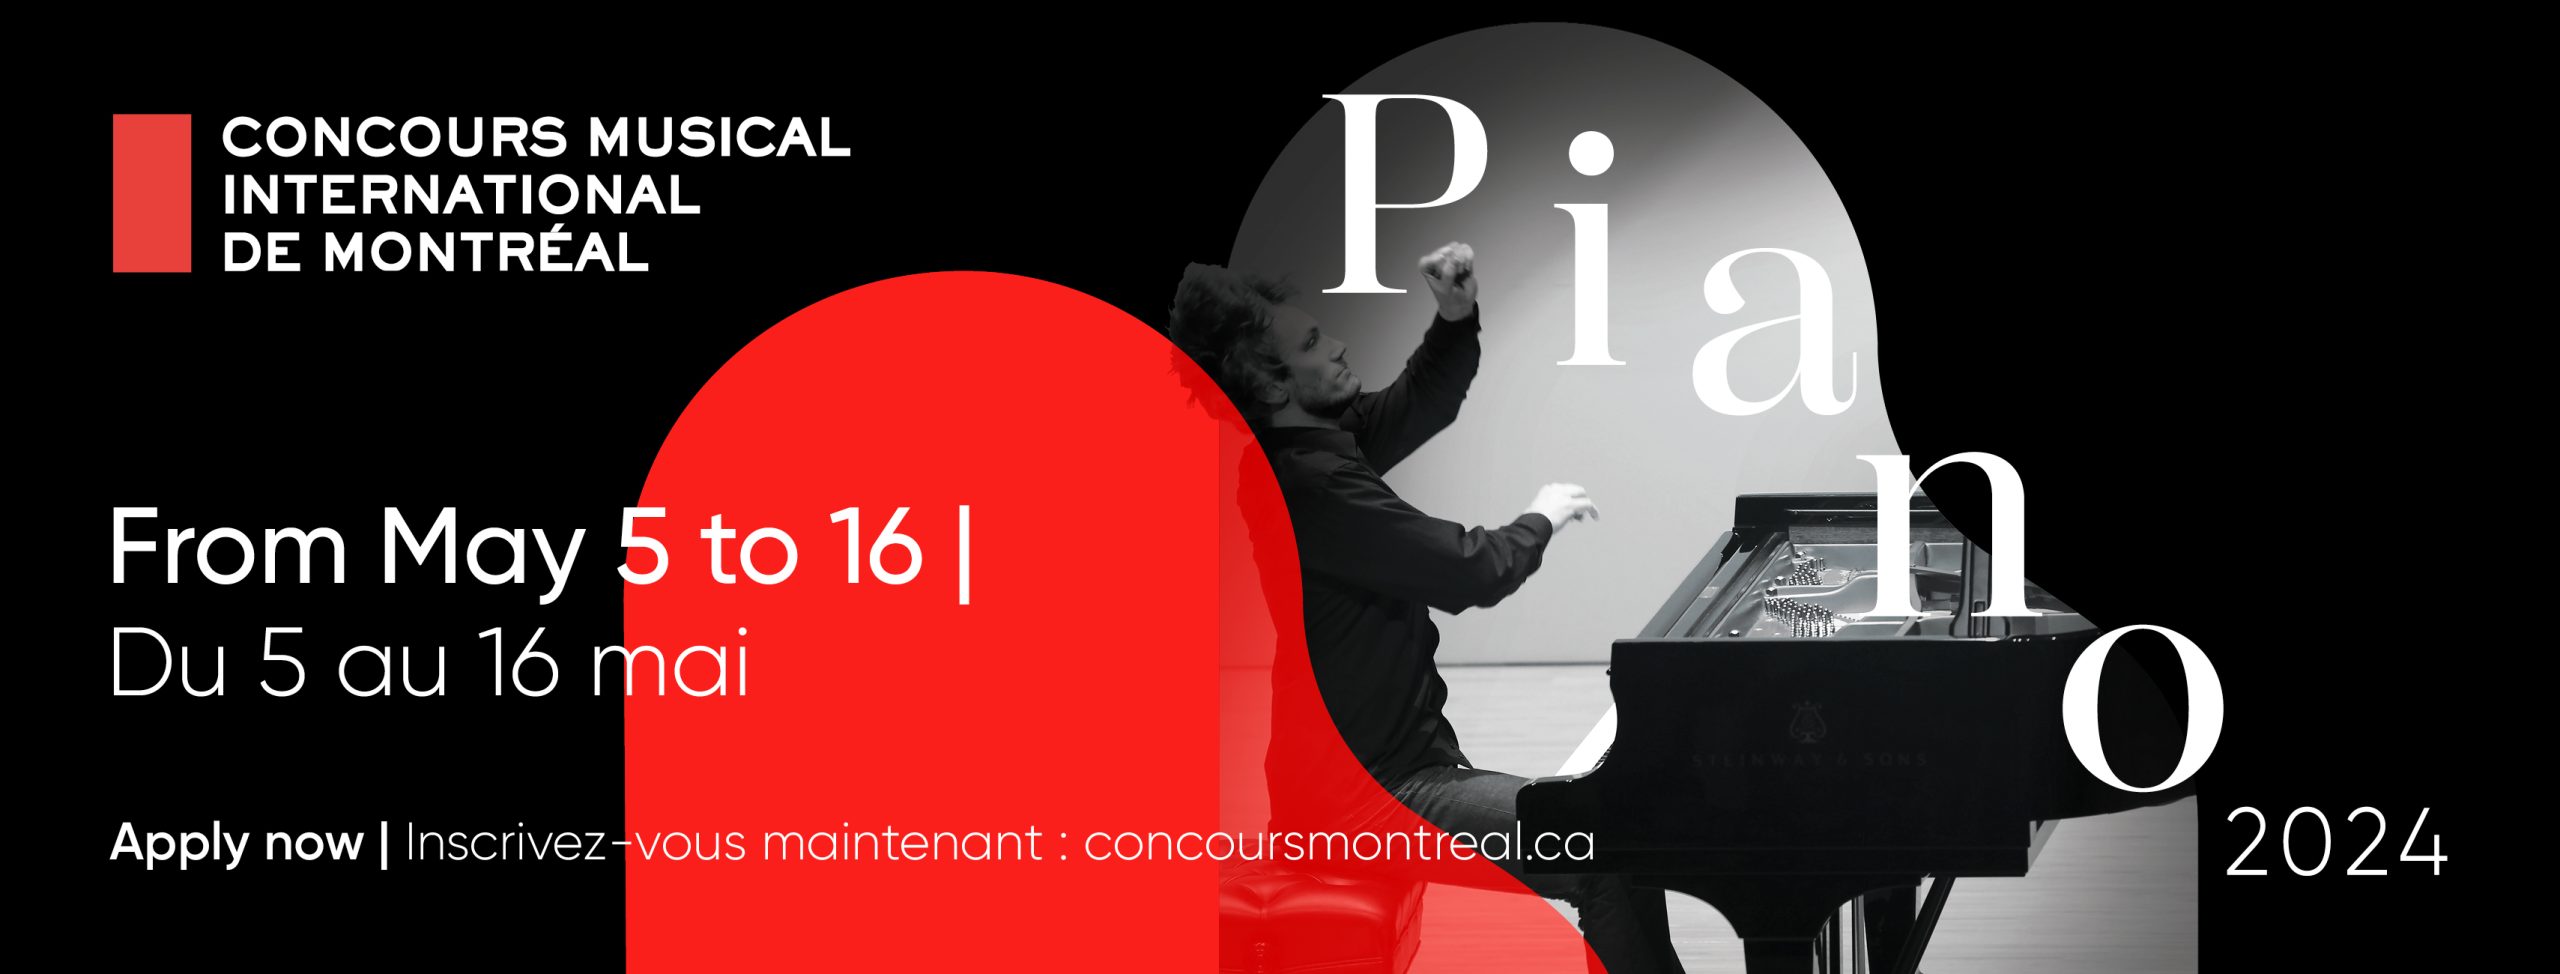 Piano 2024 Concours musical international de Montréal